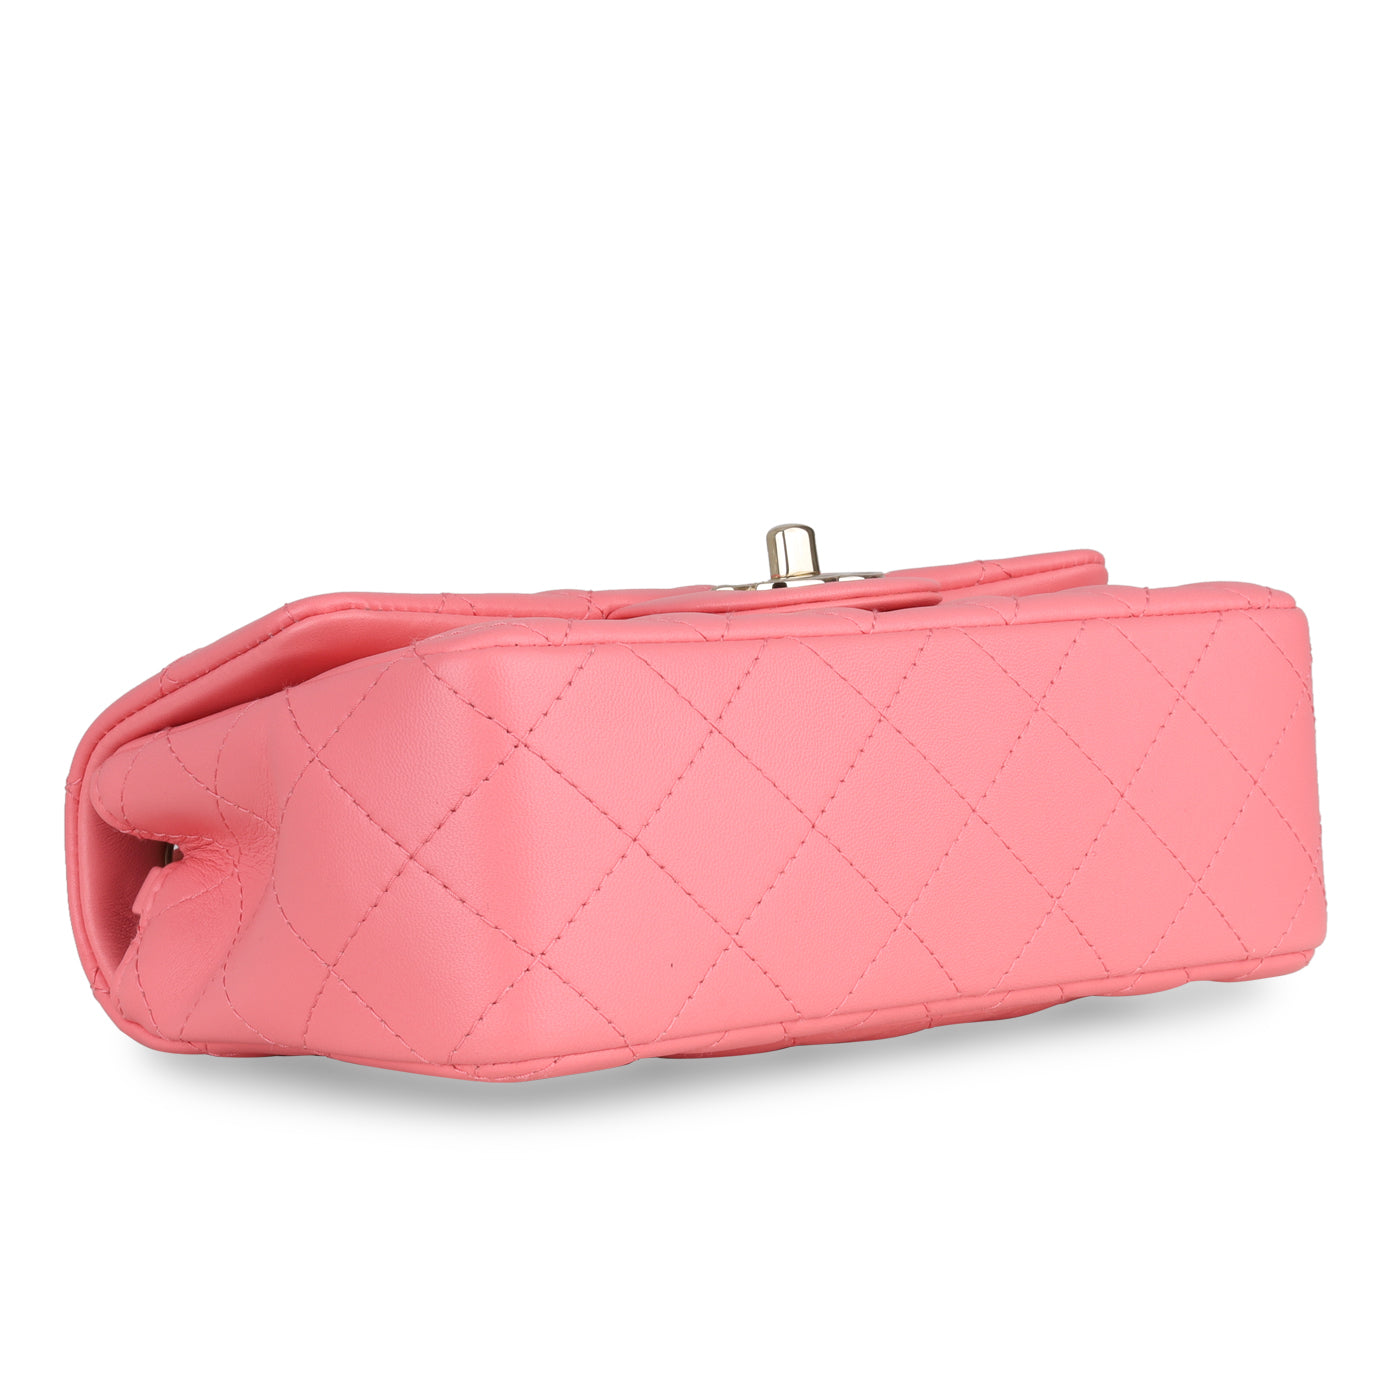 Chanel - Classic Flap Bag - Mini Rectangular - Pink Lambskin